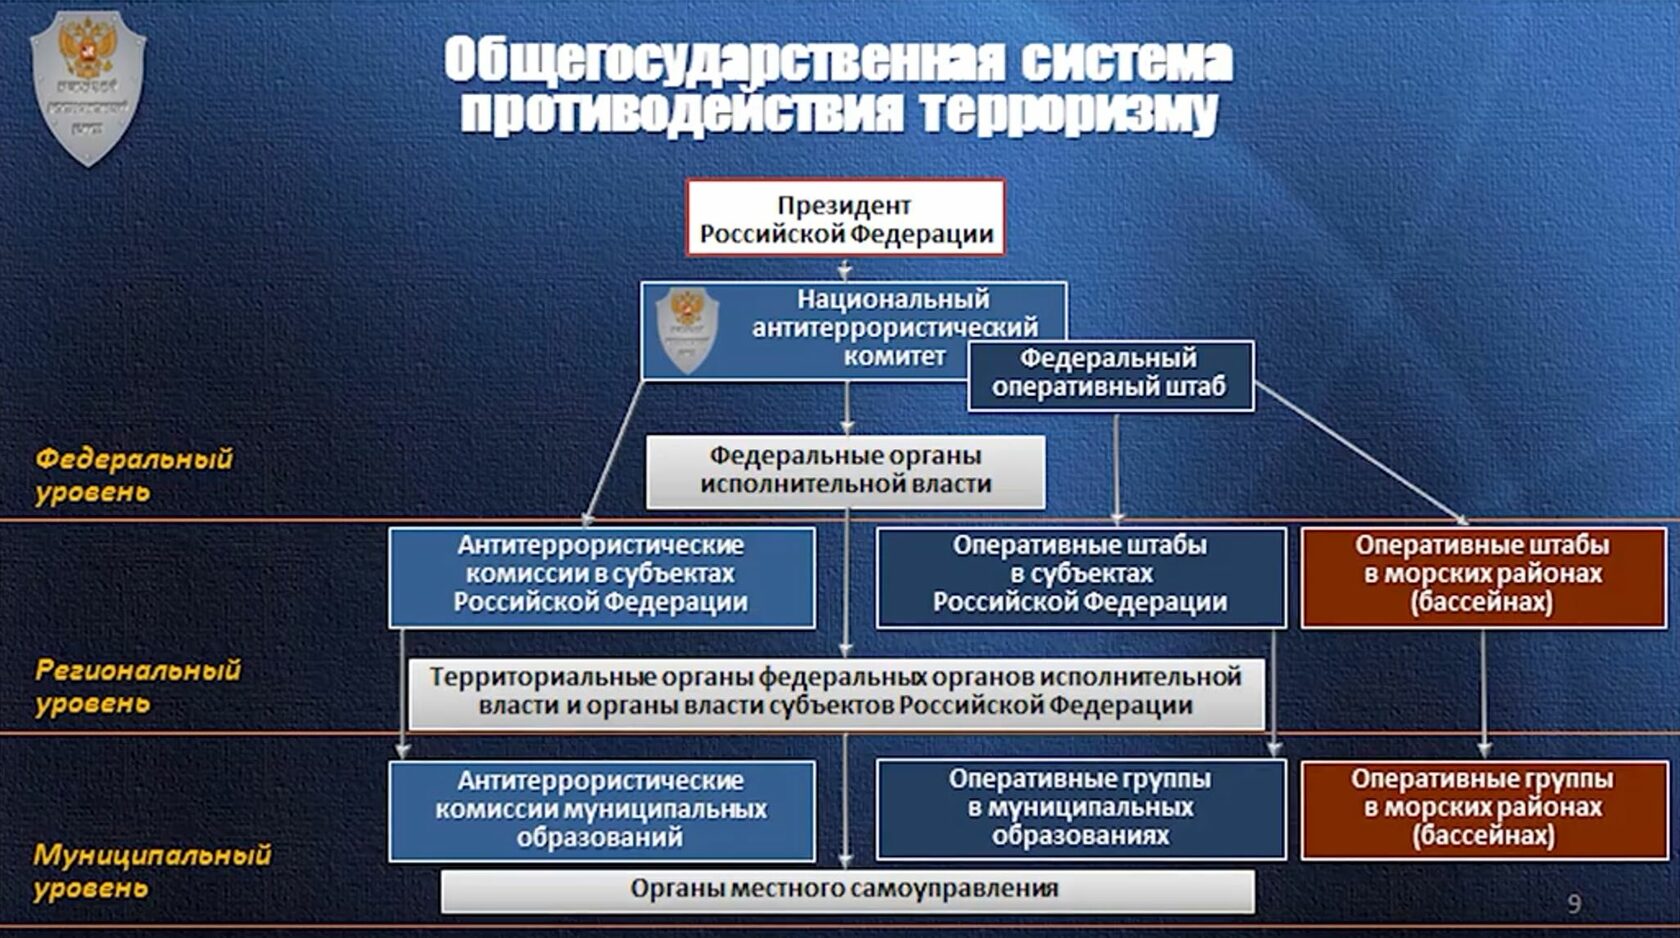 Структура аппарата национального антитеррористического комитета